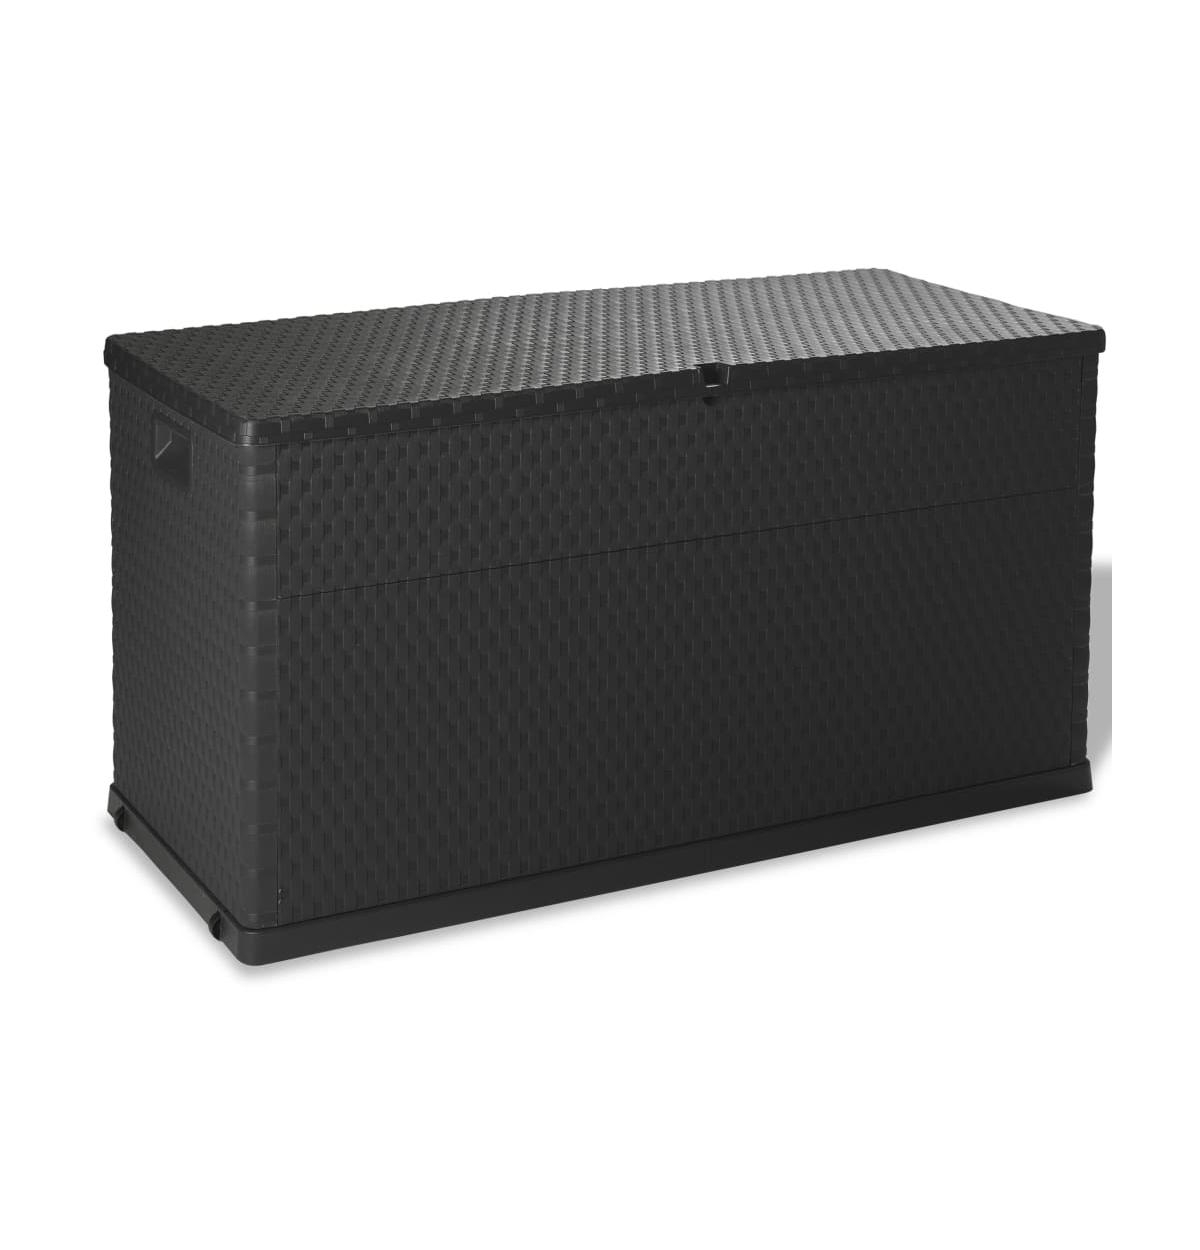 Patio Storage Box Anthracite 47.2"x22"x24.8" Pp Rattan - Dark Grey